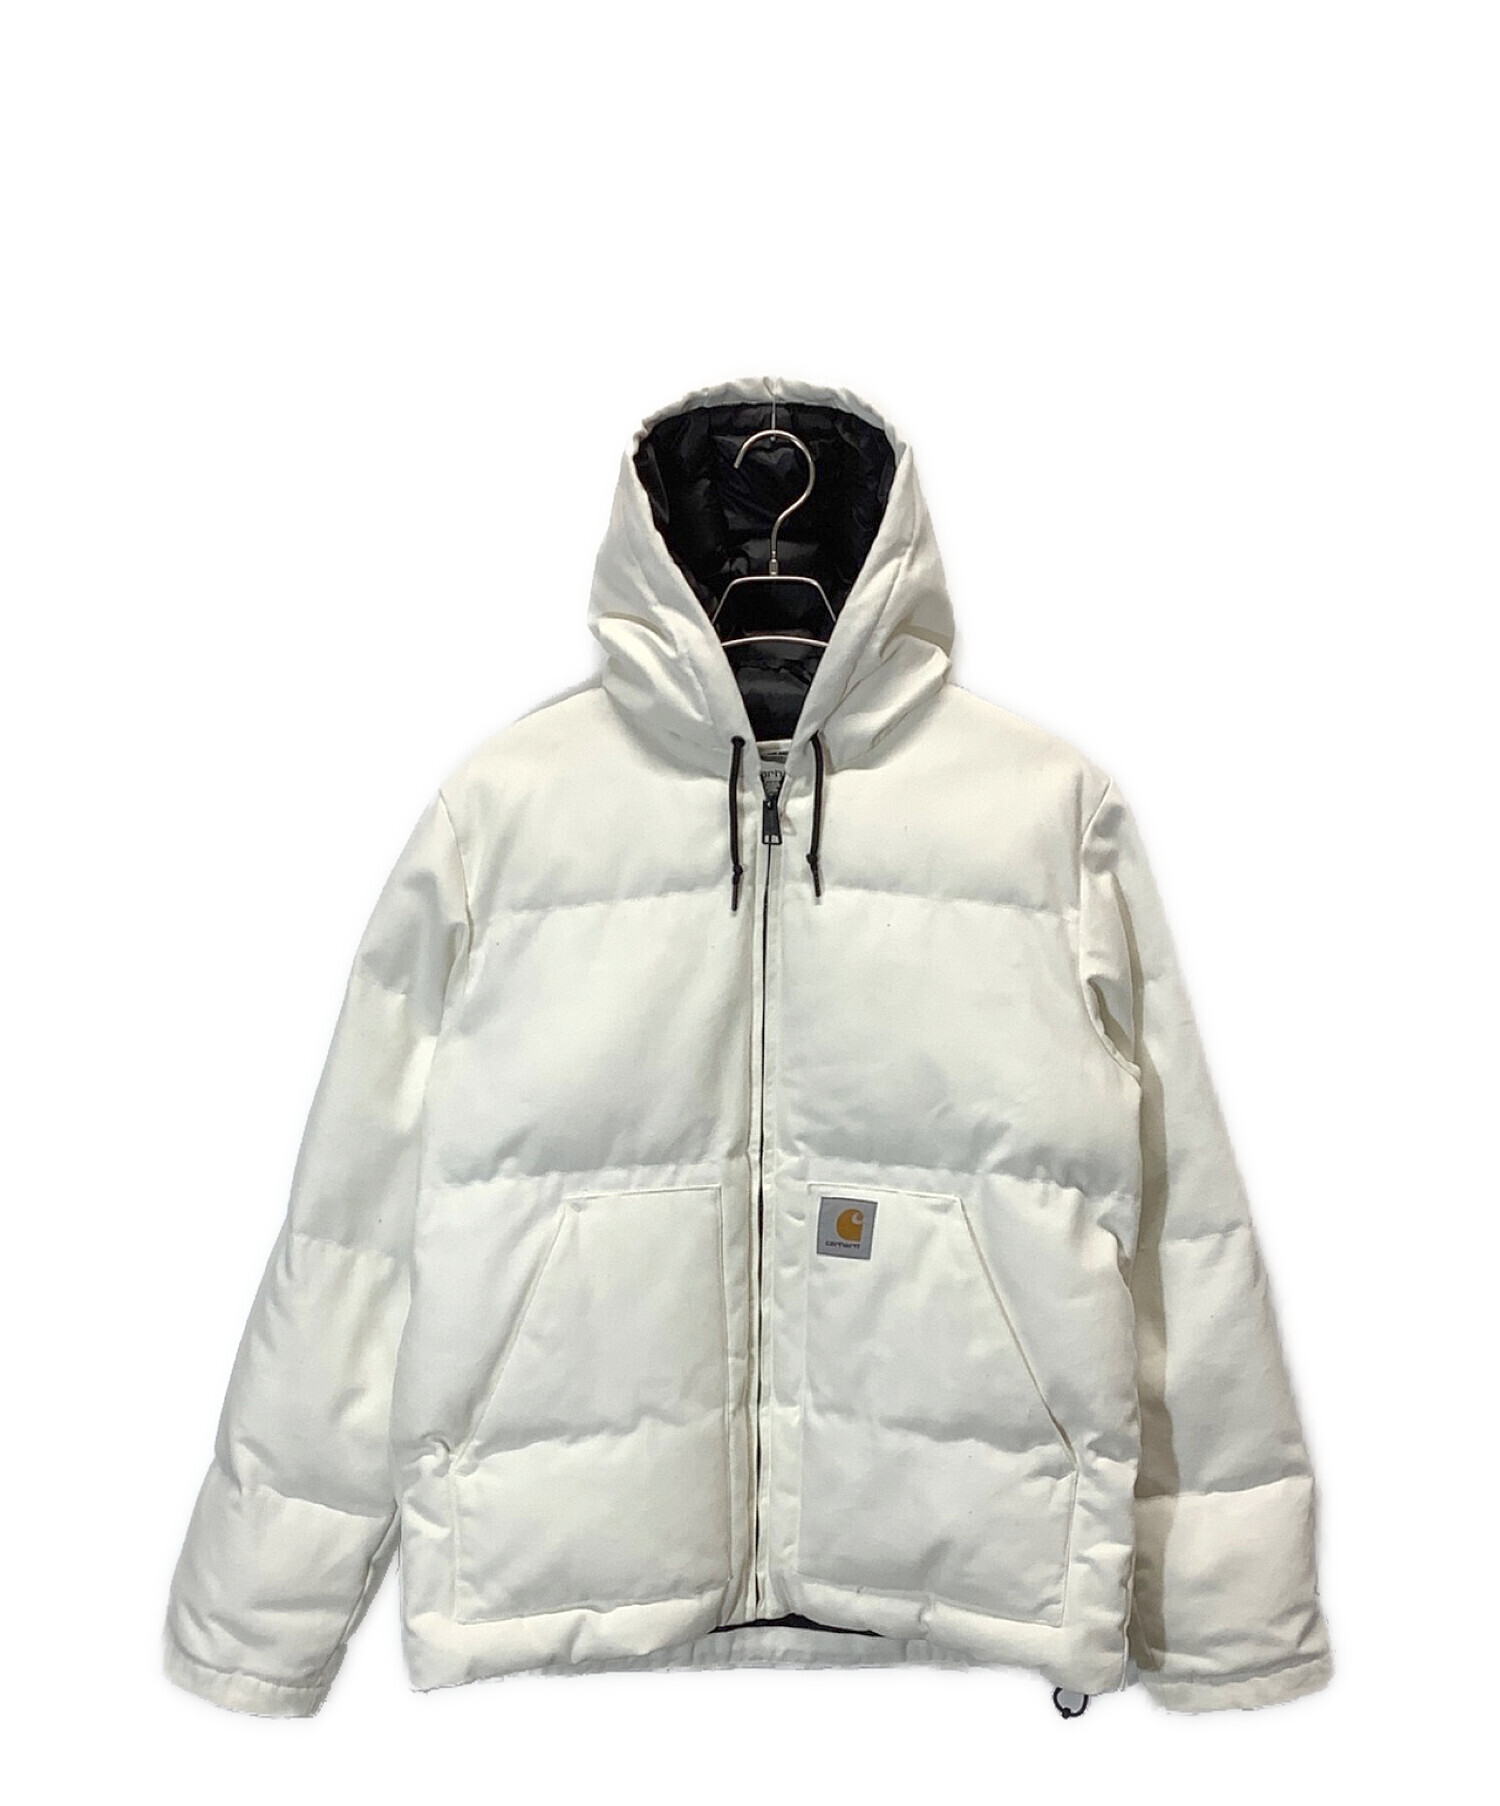 Carhartt WIP brooke jacket袖丈66